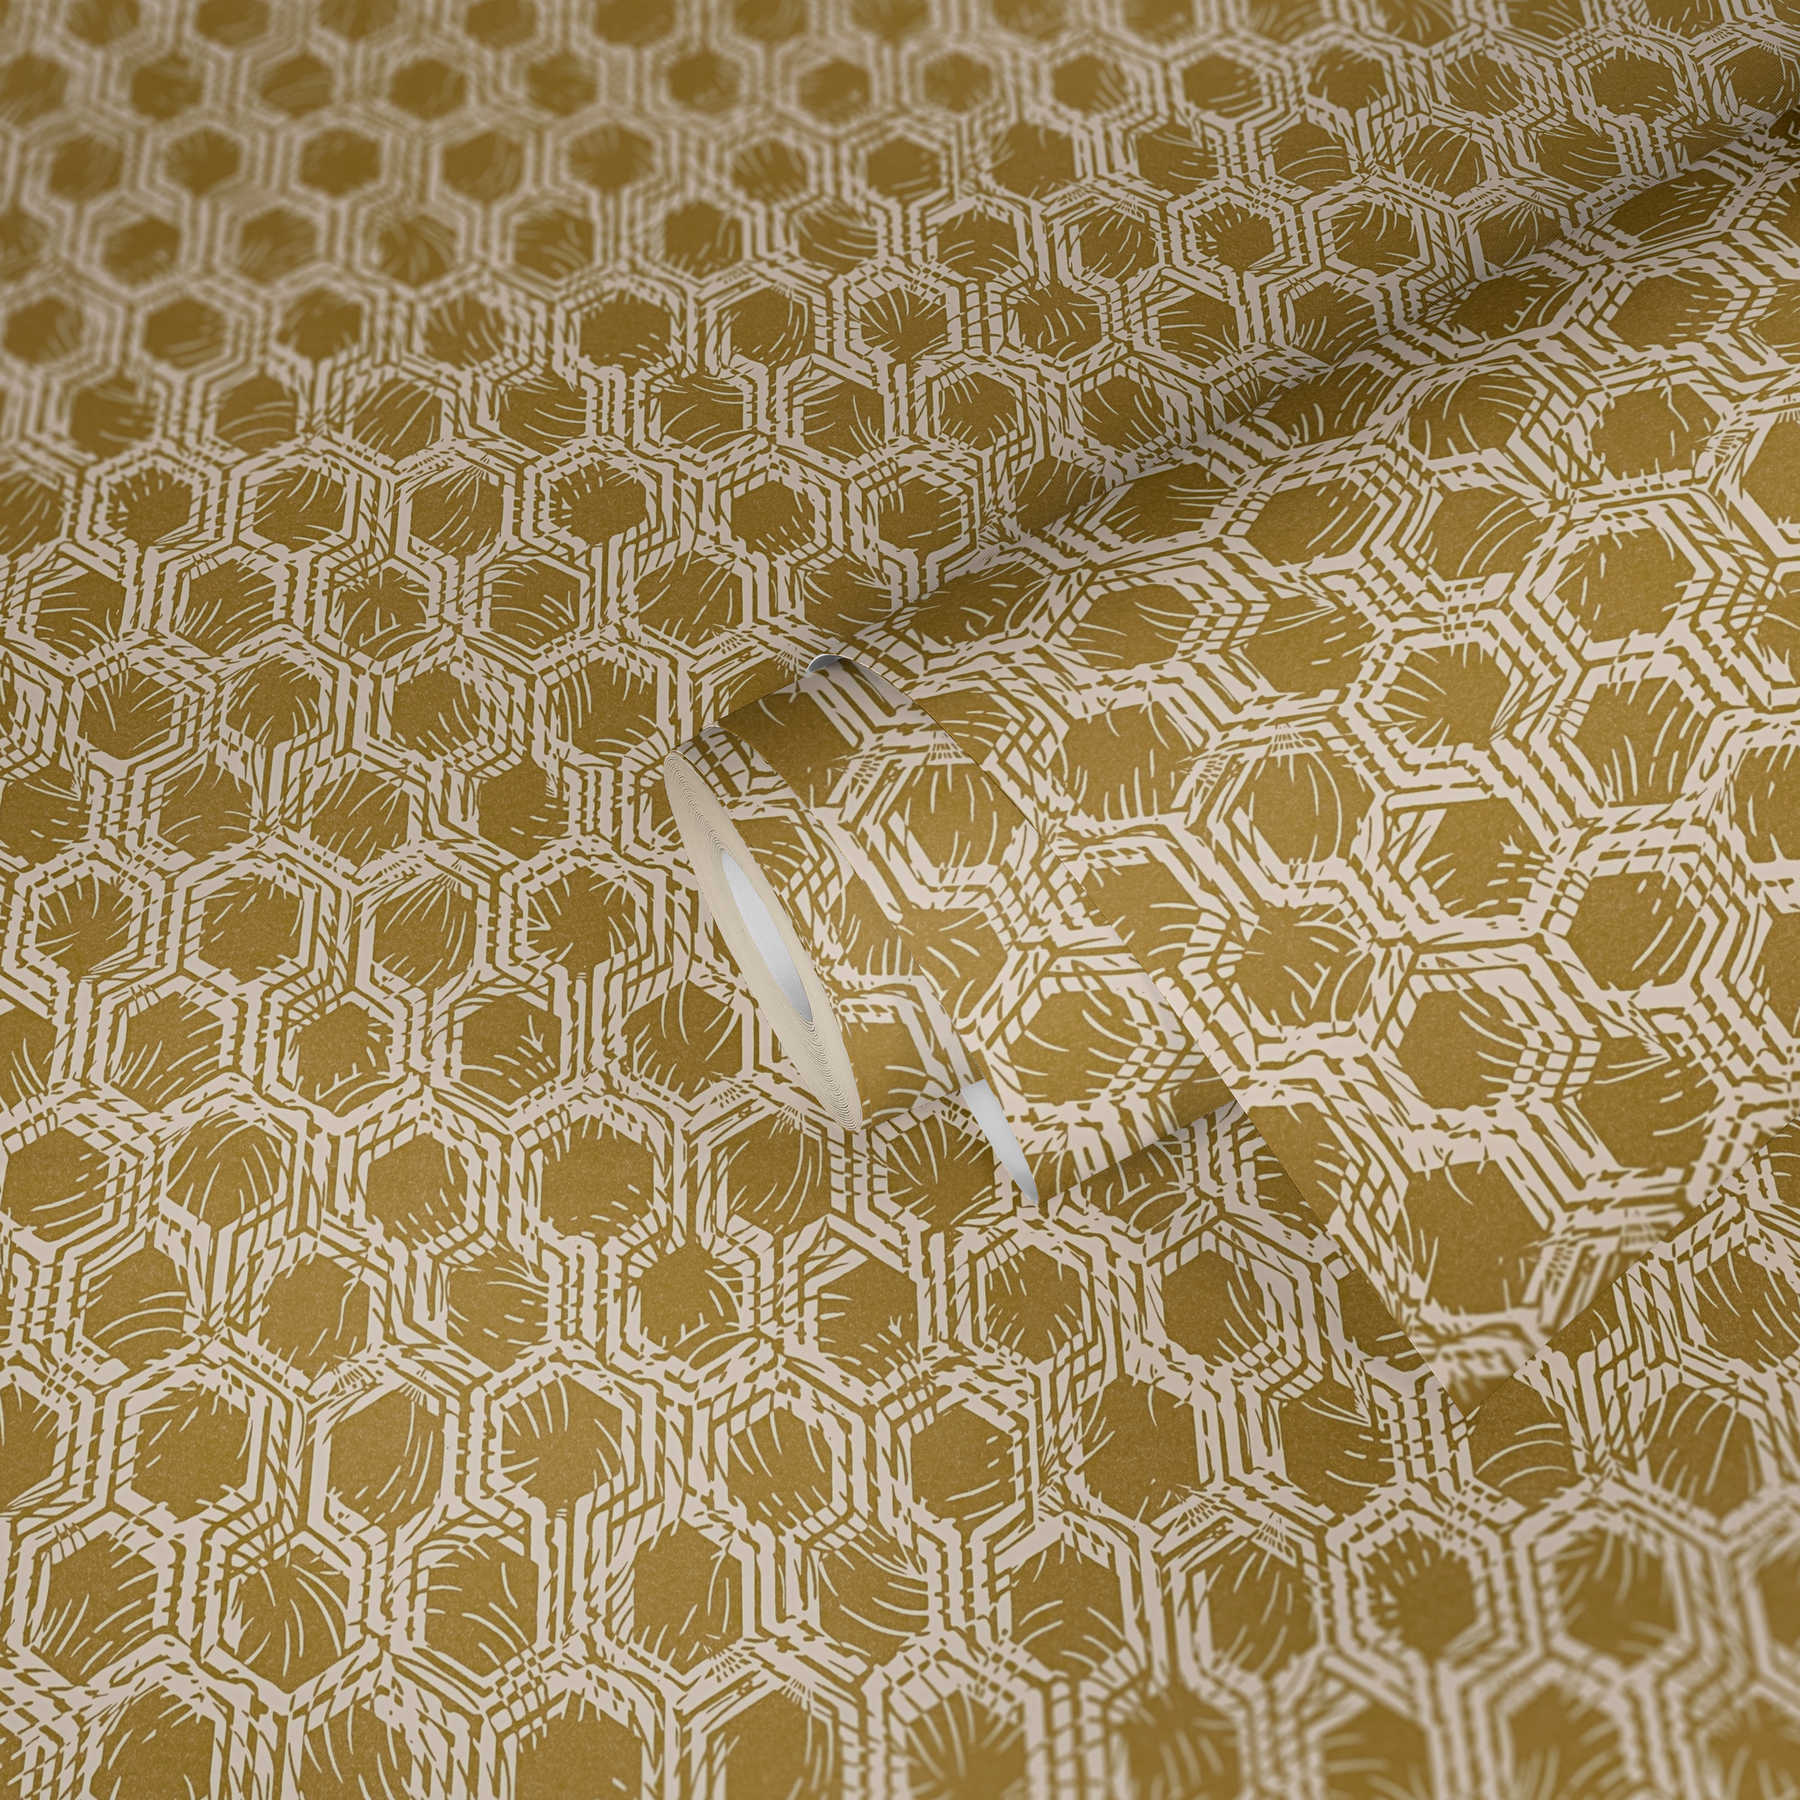             Metallic wallpaper with geometric pattern - gold, beige
        